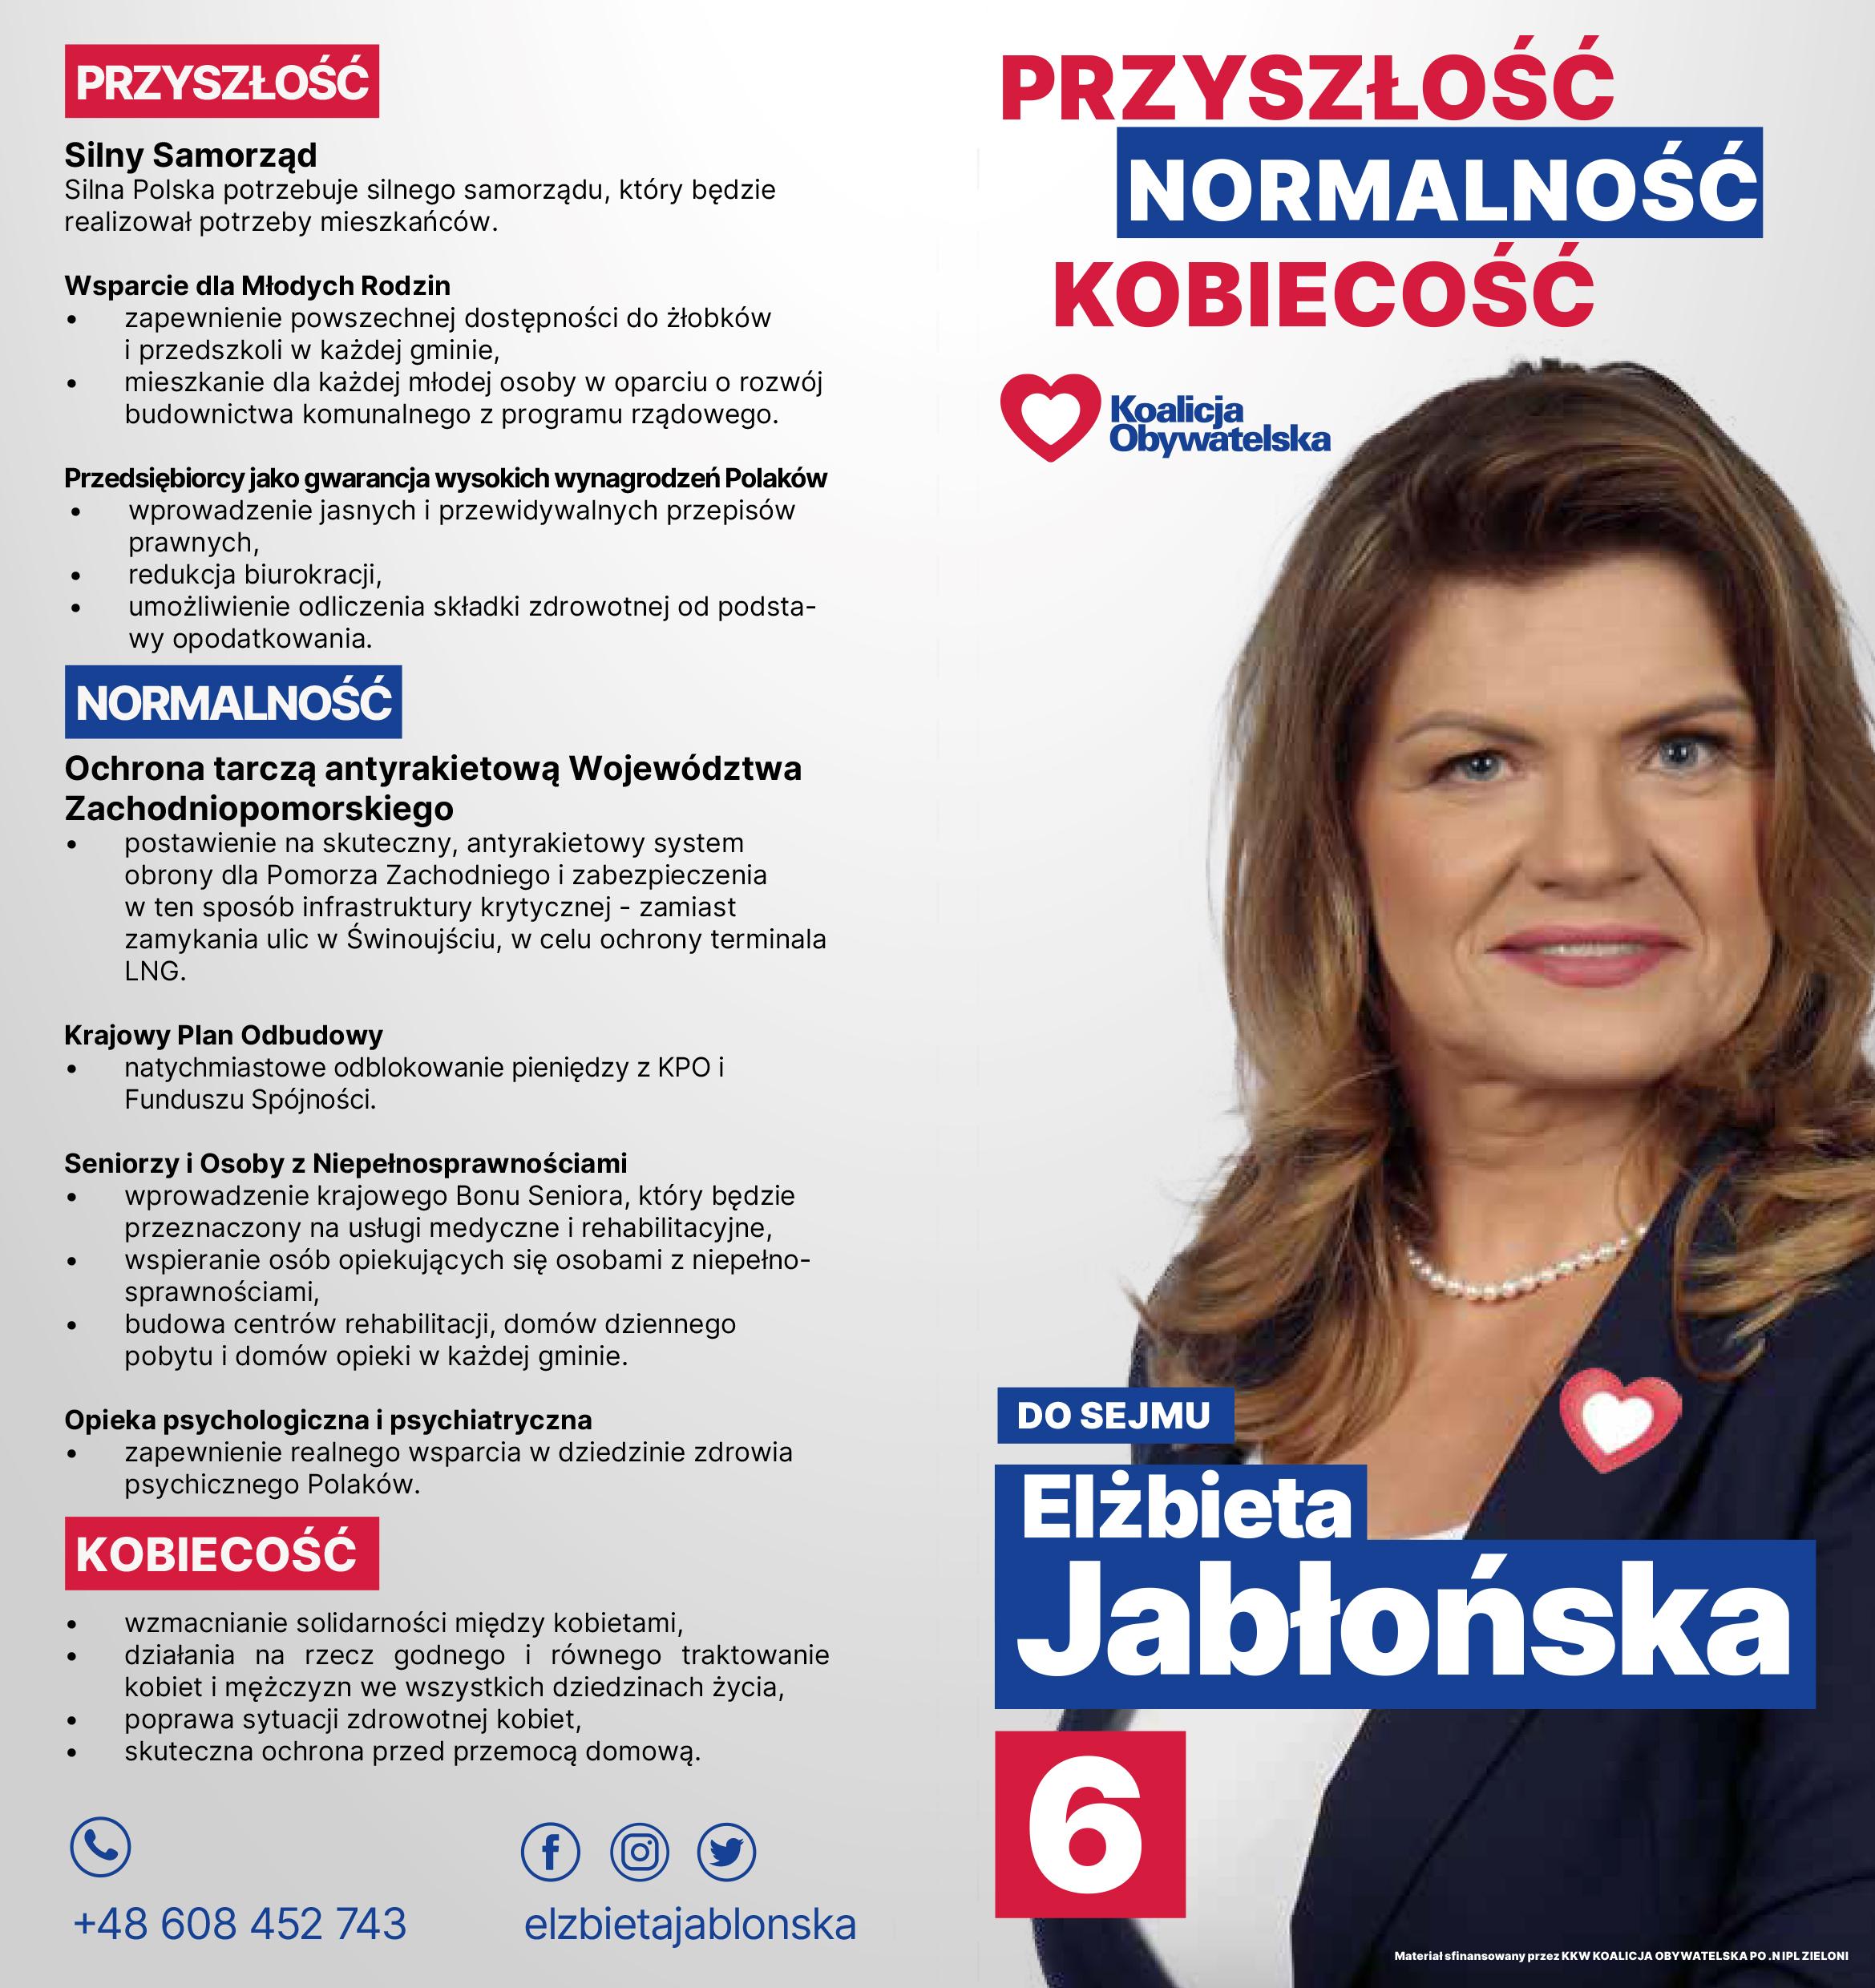 Mój Program Sejm 2023 Elzbieta Jabłońska